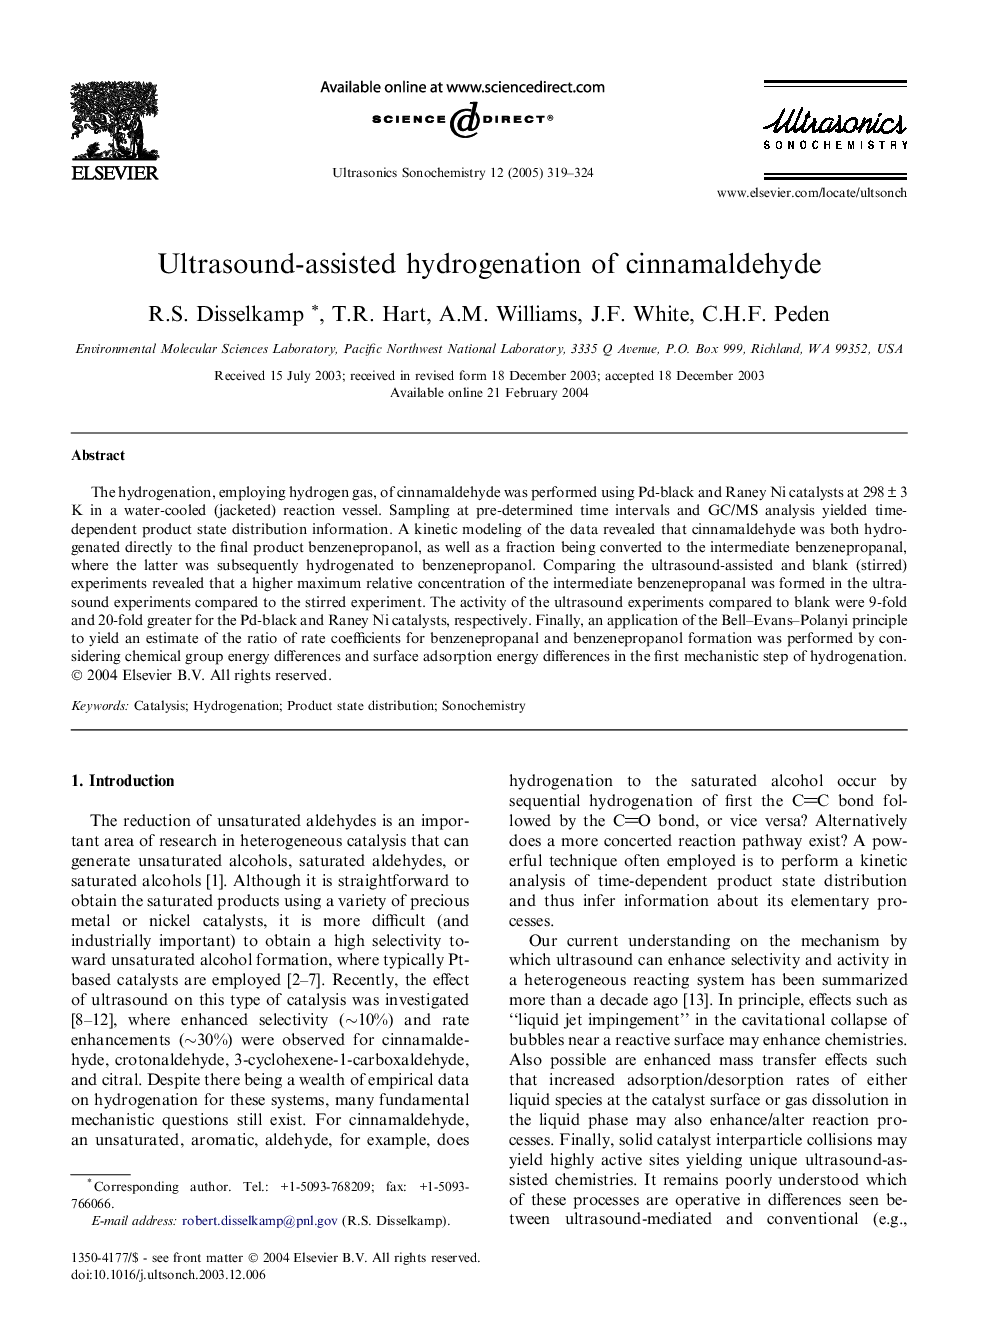 Ultrasound-assisted hydrogenation of cinnamaldehyde